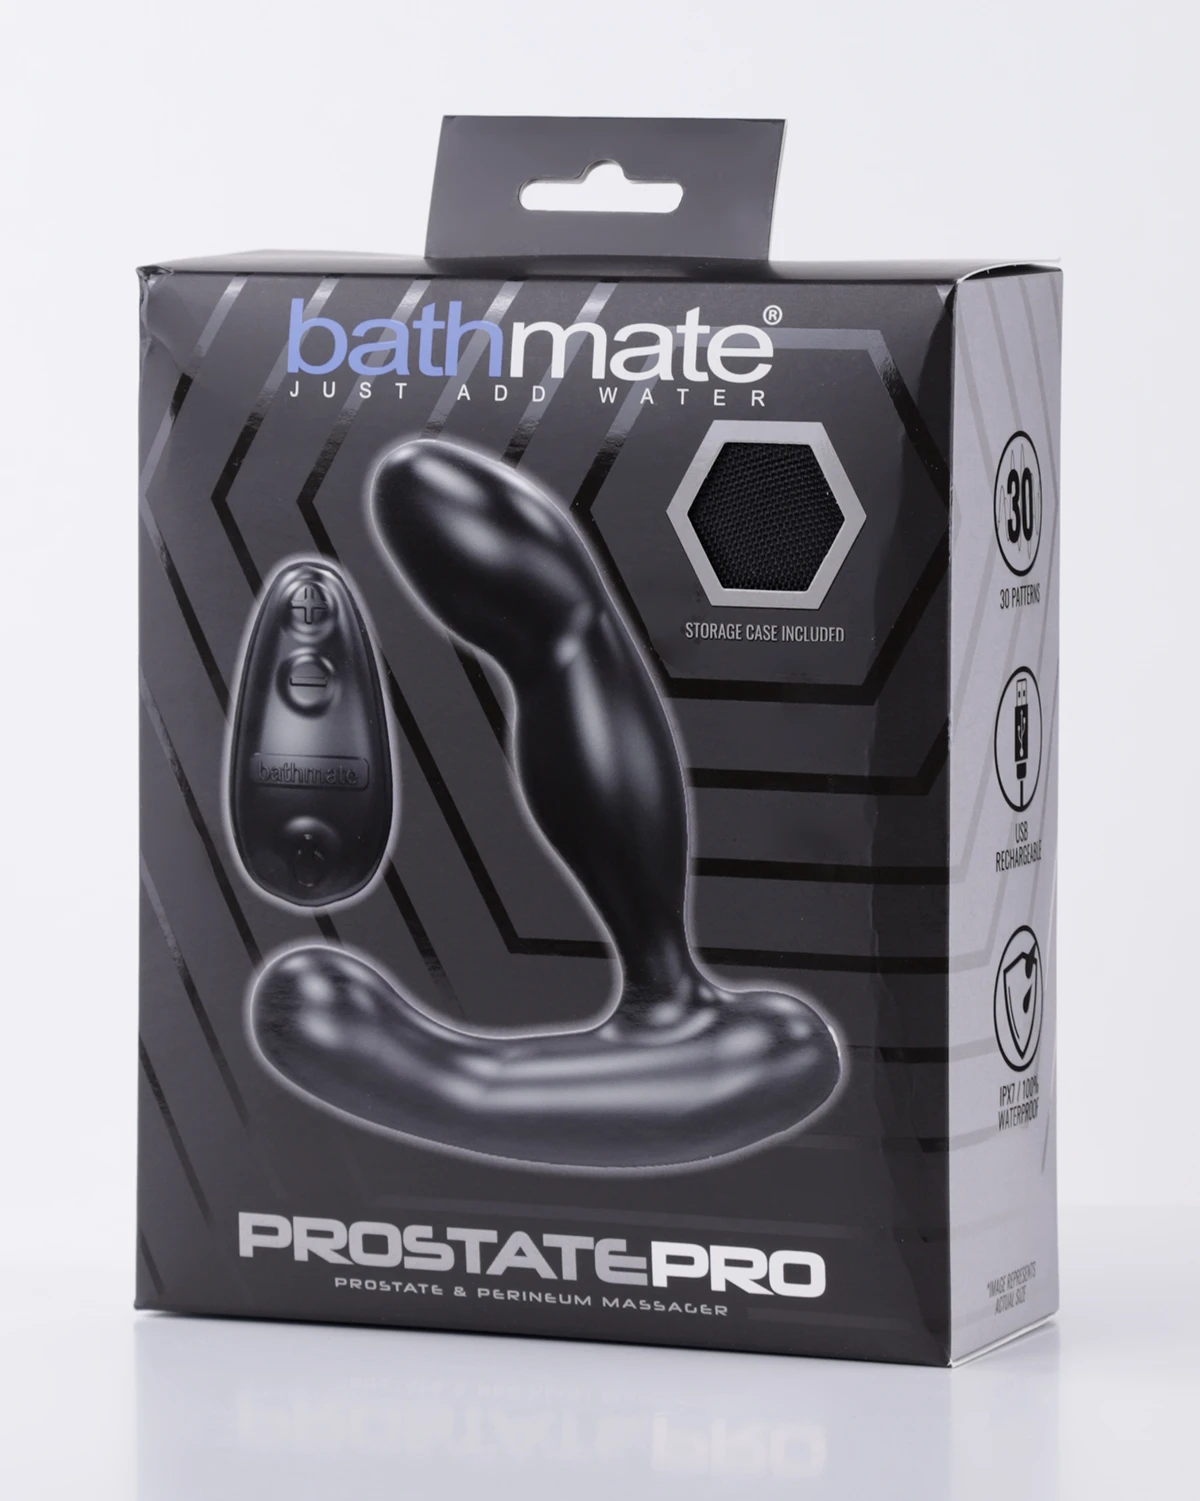 Bathmate Prostate Pro